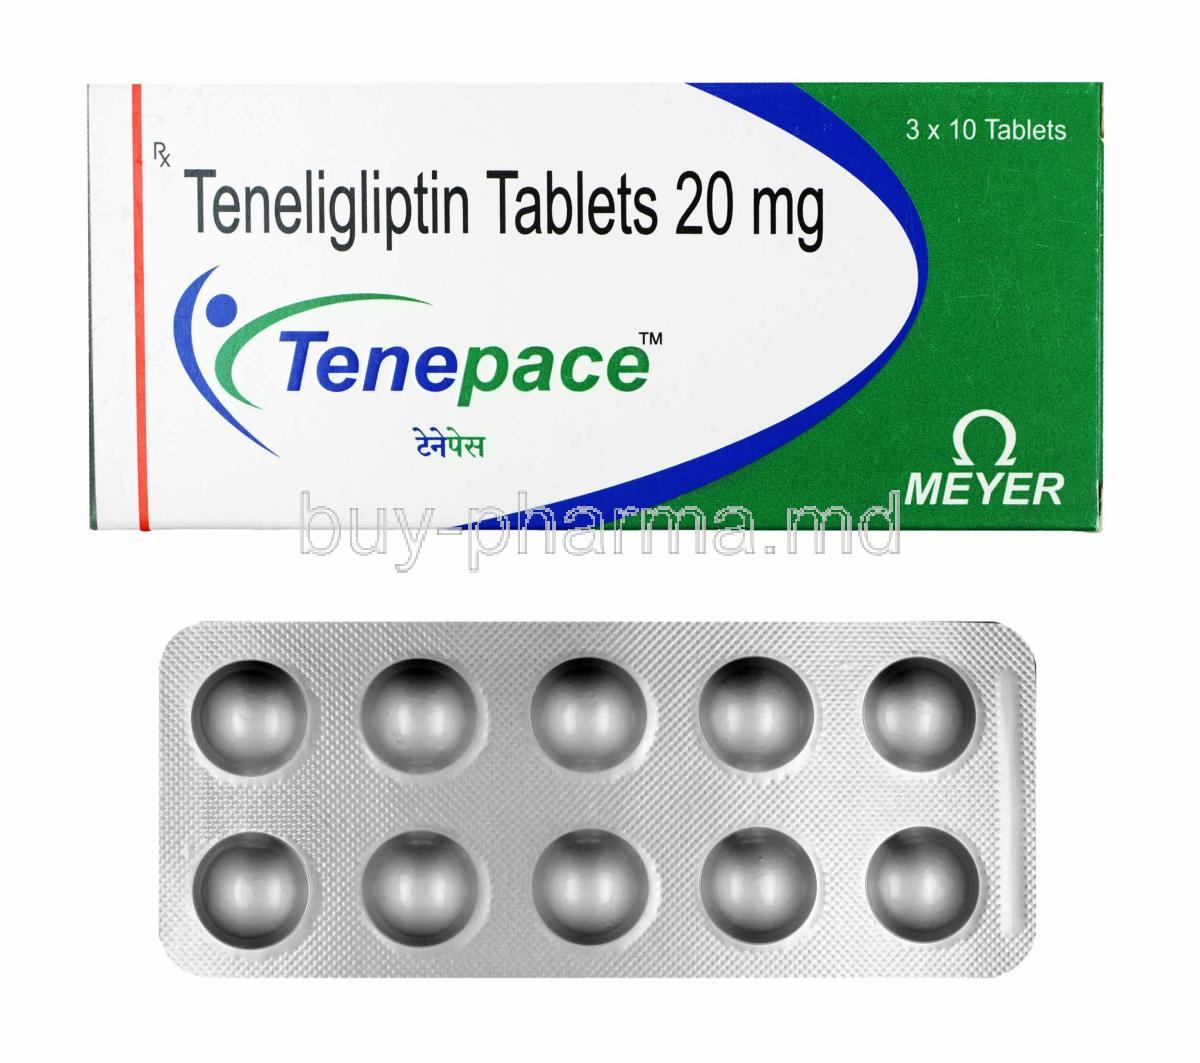 Tenepace, Teneligliptin 20mg box and tablets